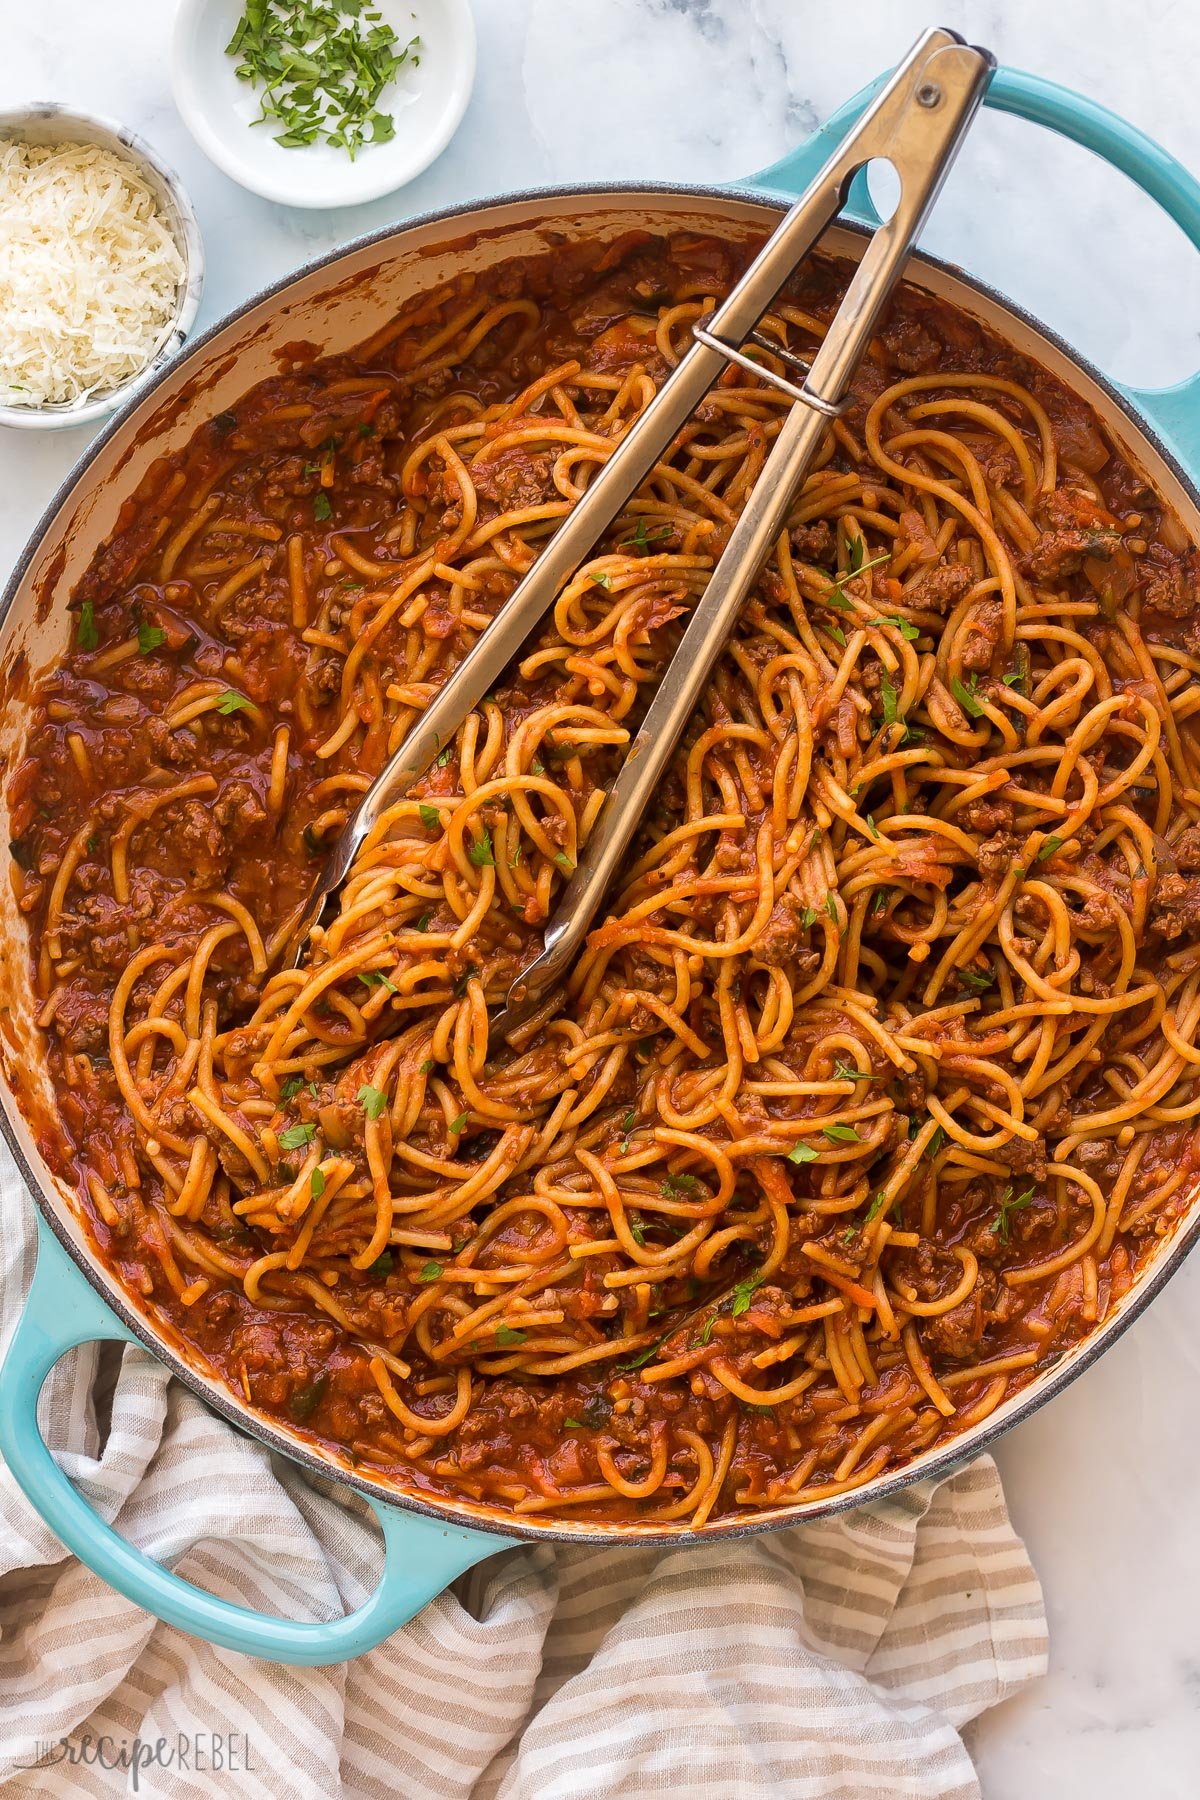 https://www.thereciperebel.com/wp-content/uploads/2018/11/healthy-one-pot-spaghetti-www.thereciperebel.com-1200-18-of-43.jpg